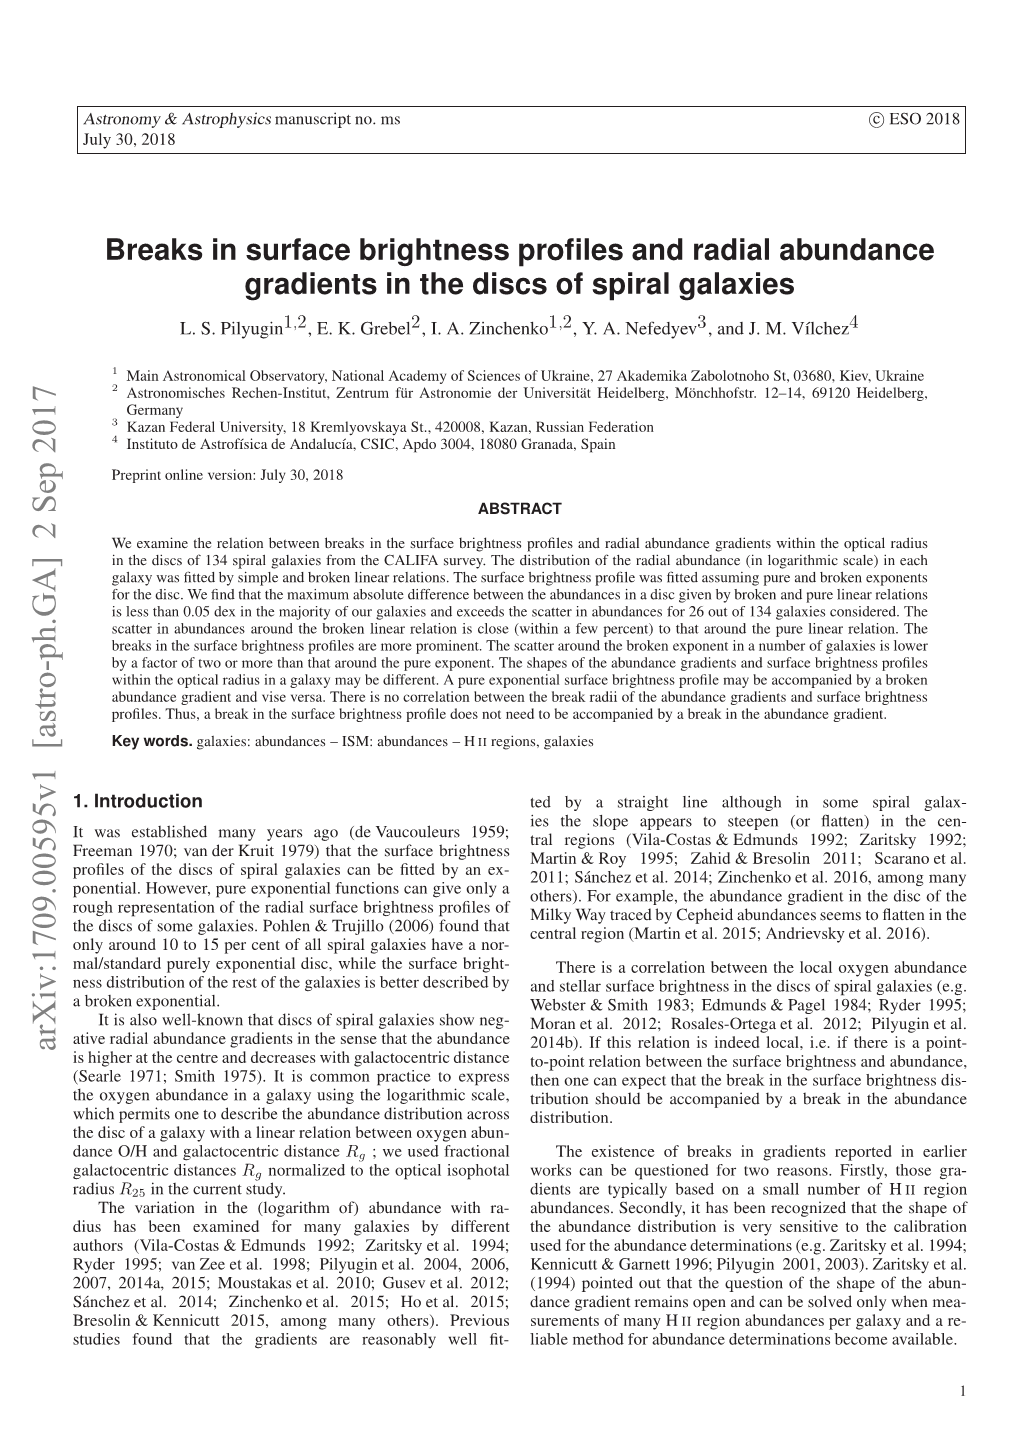 Breaks in Surface Brightness Profiles and Radial Abundance Gradients In